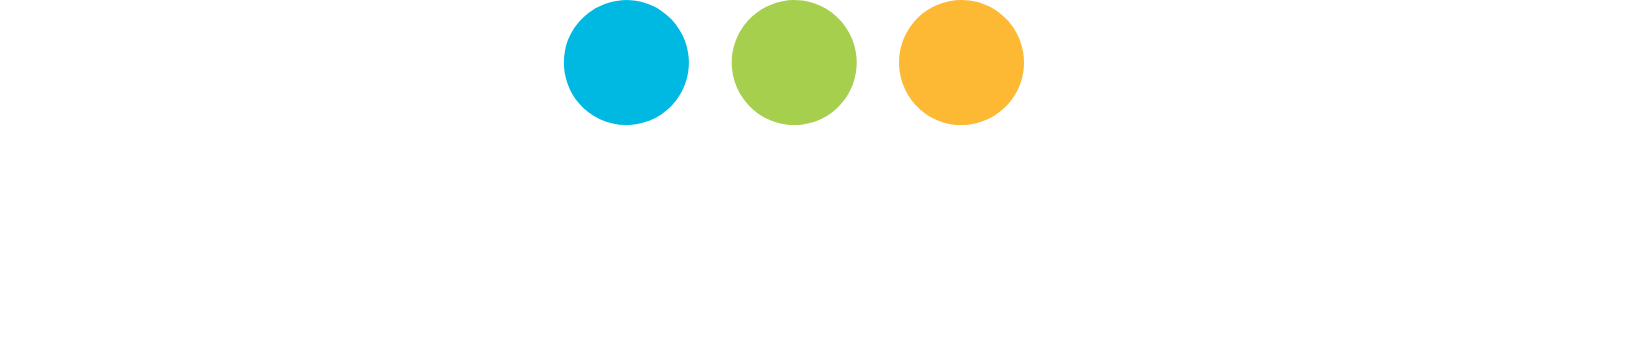 Bluegreen Vacations
 Logo groß für dunkle Hintergründe (transparentes PNG)